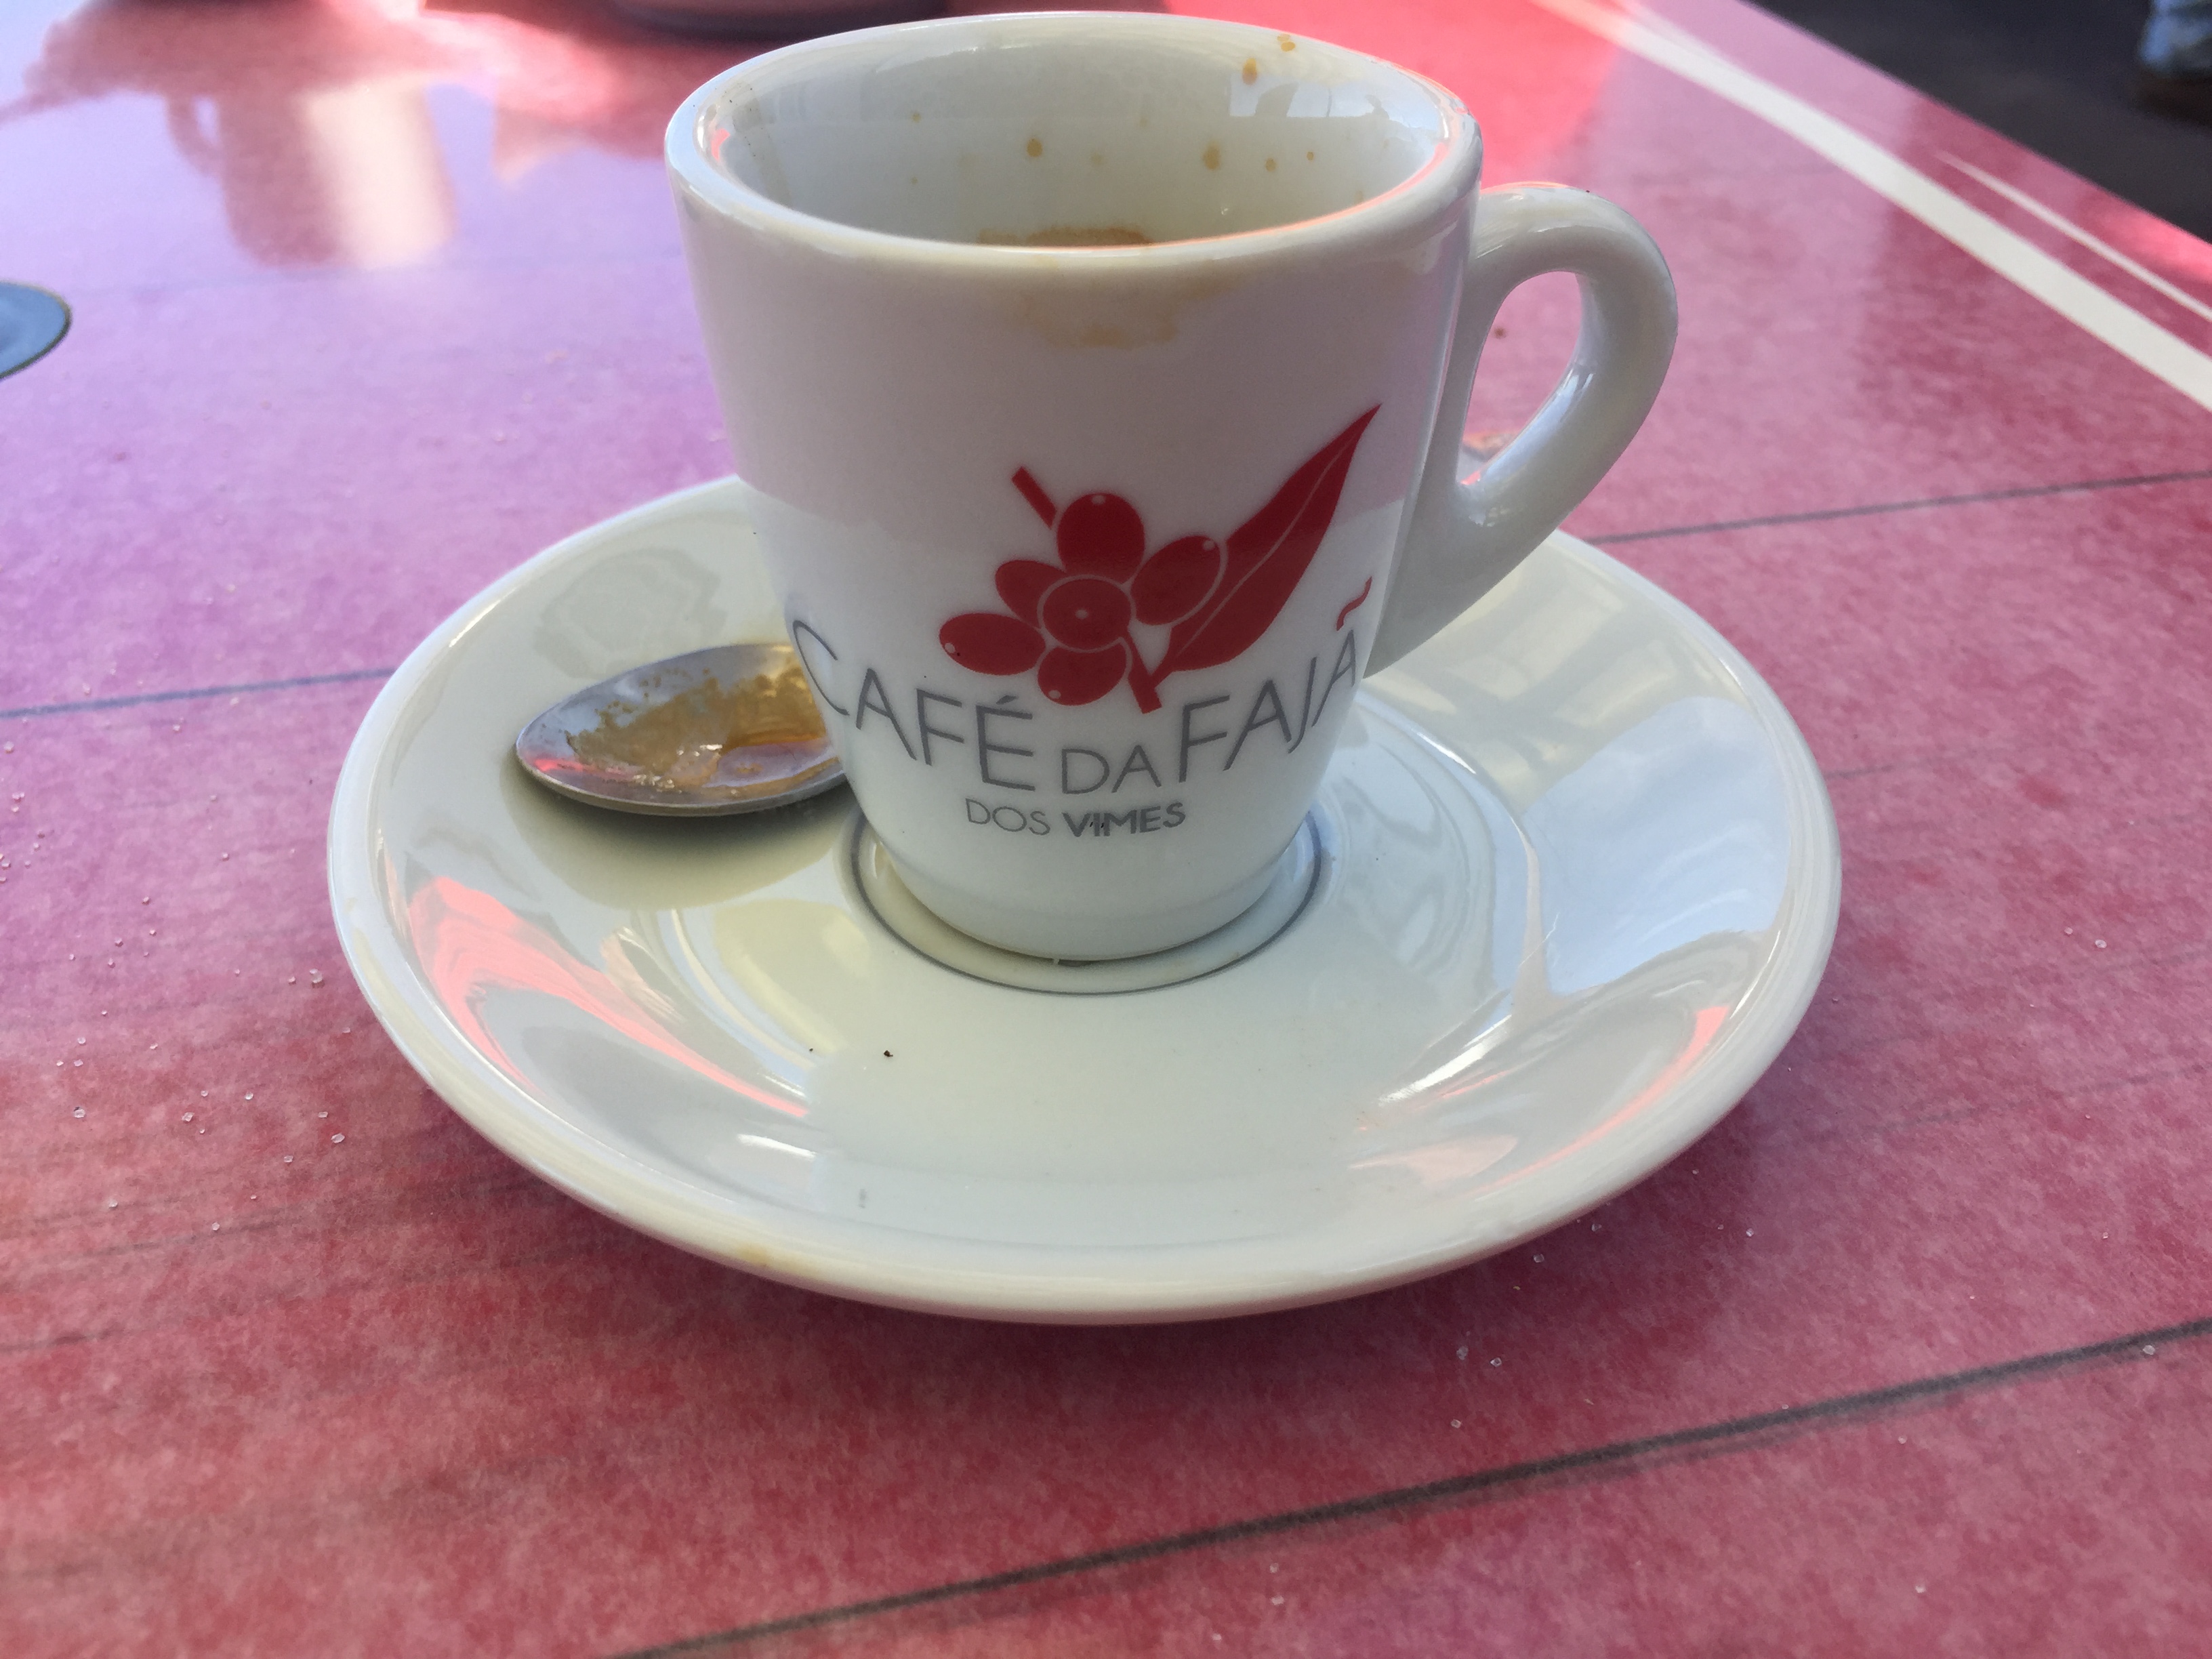 Cafè da Faja - Sao Jorge - Azzorre